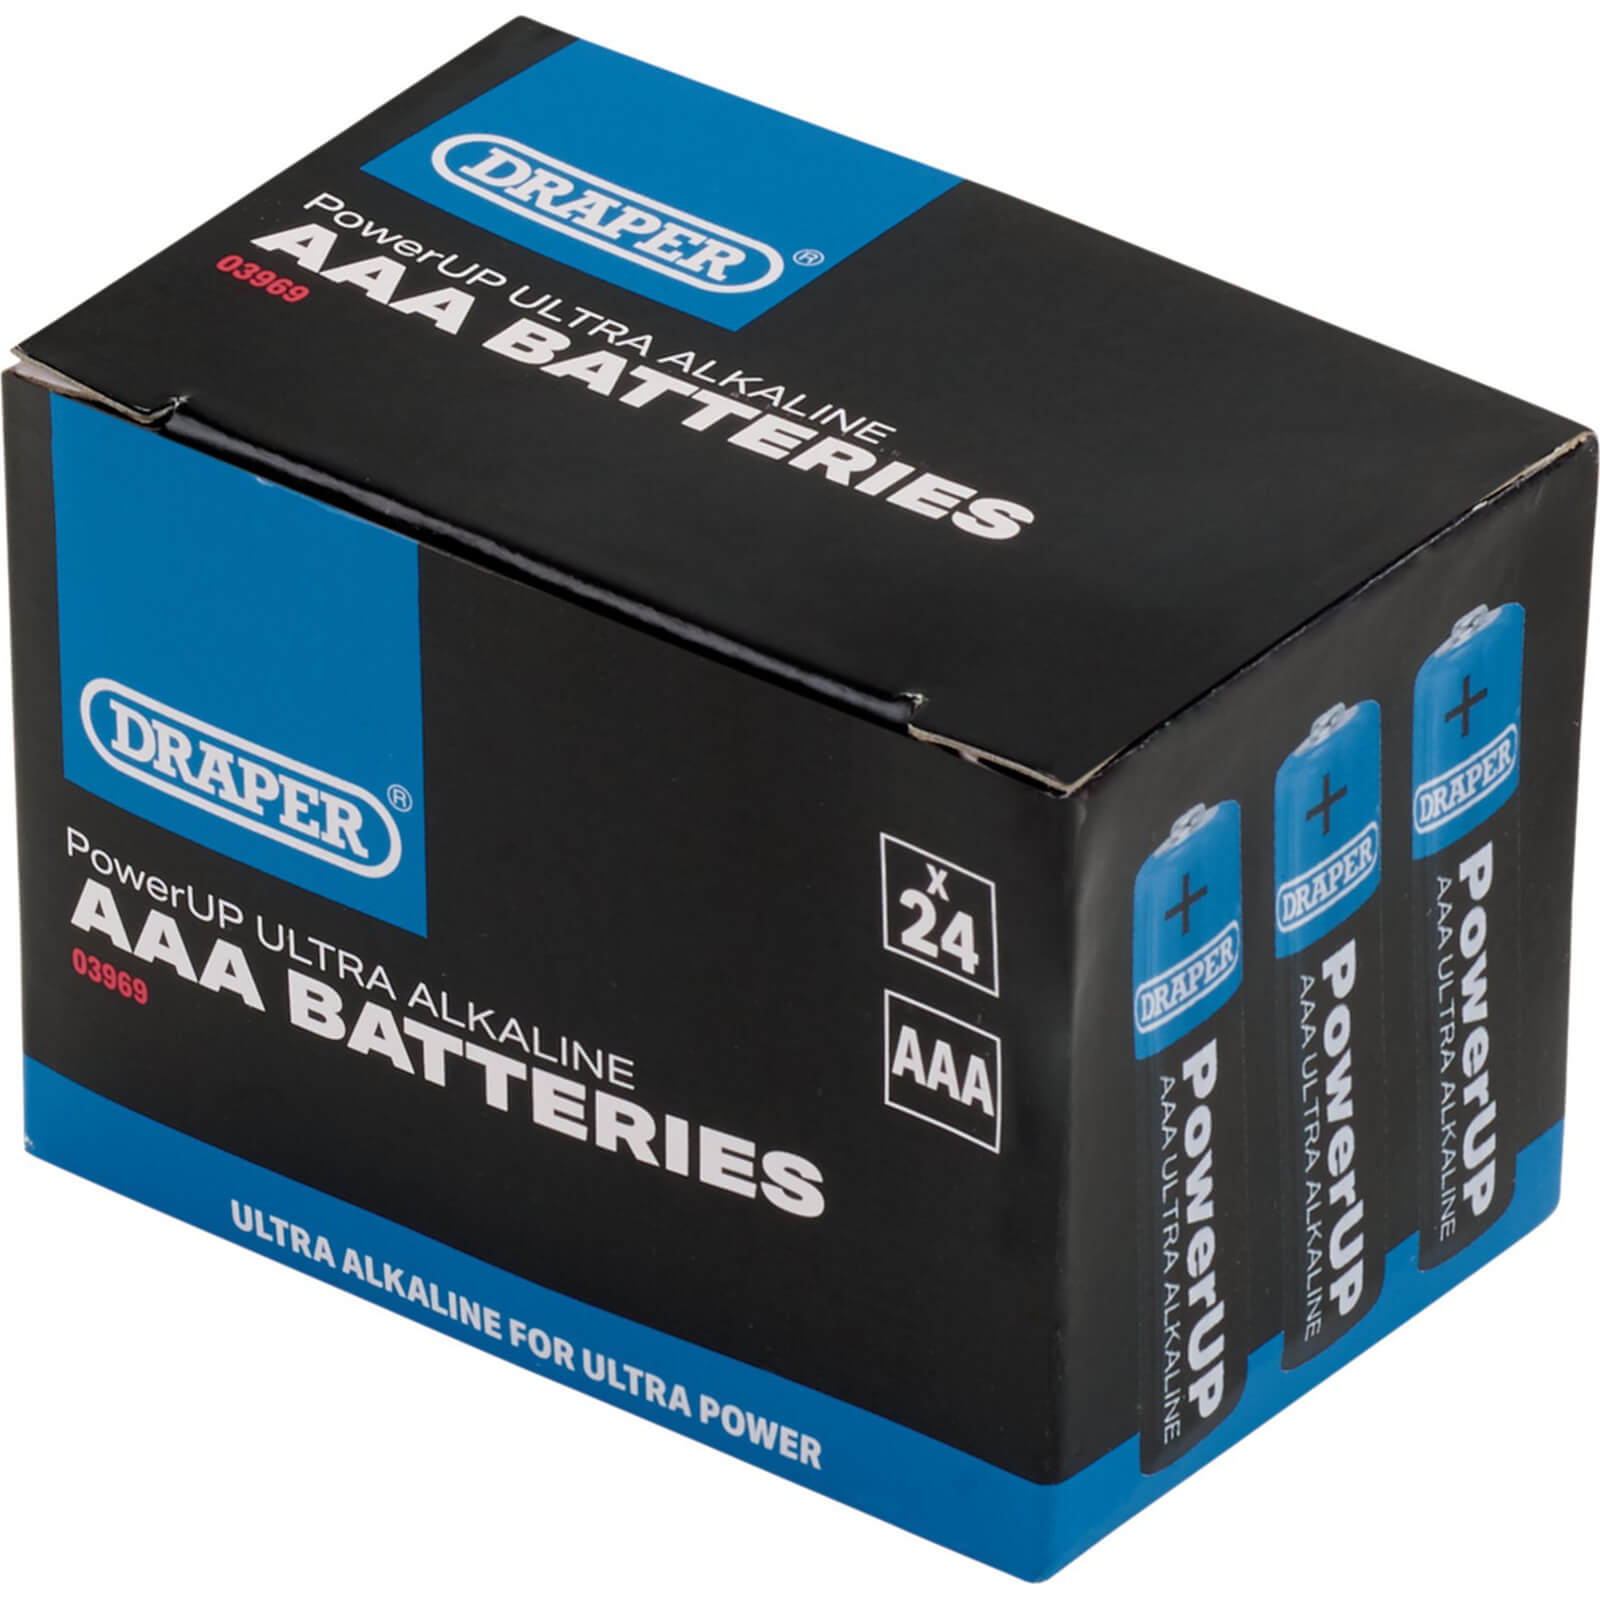 Image of Draper Powerup Ultra Alkaline AAA Batteries Pack of 24